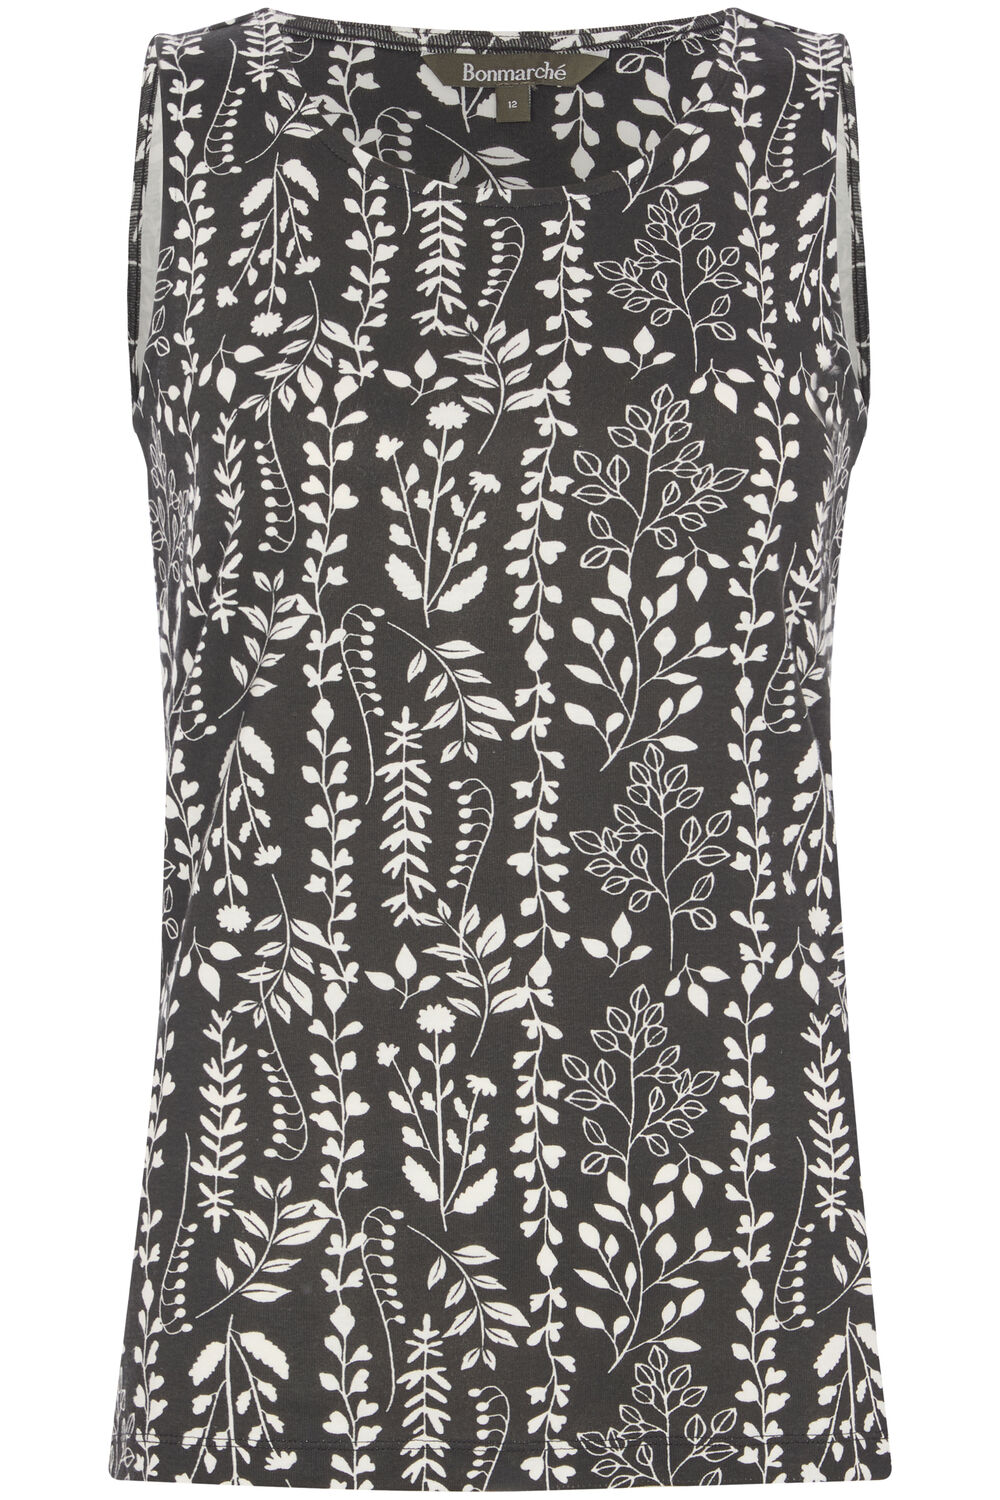 Bonmarche Black Sleeveless Floral Stem Print Scoop Neck Vest, Size: 10